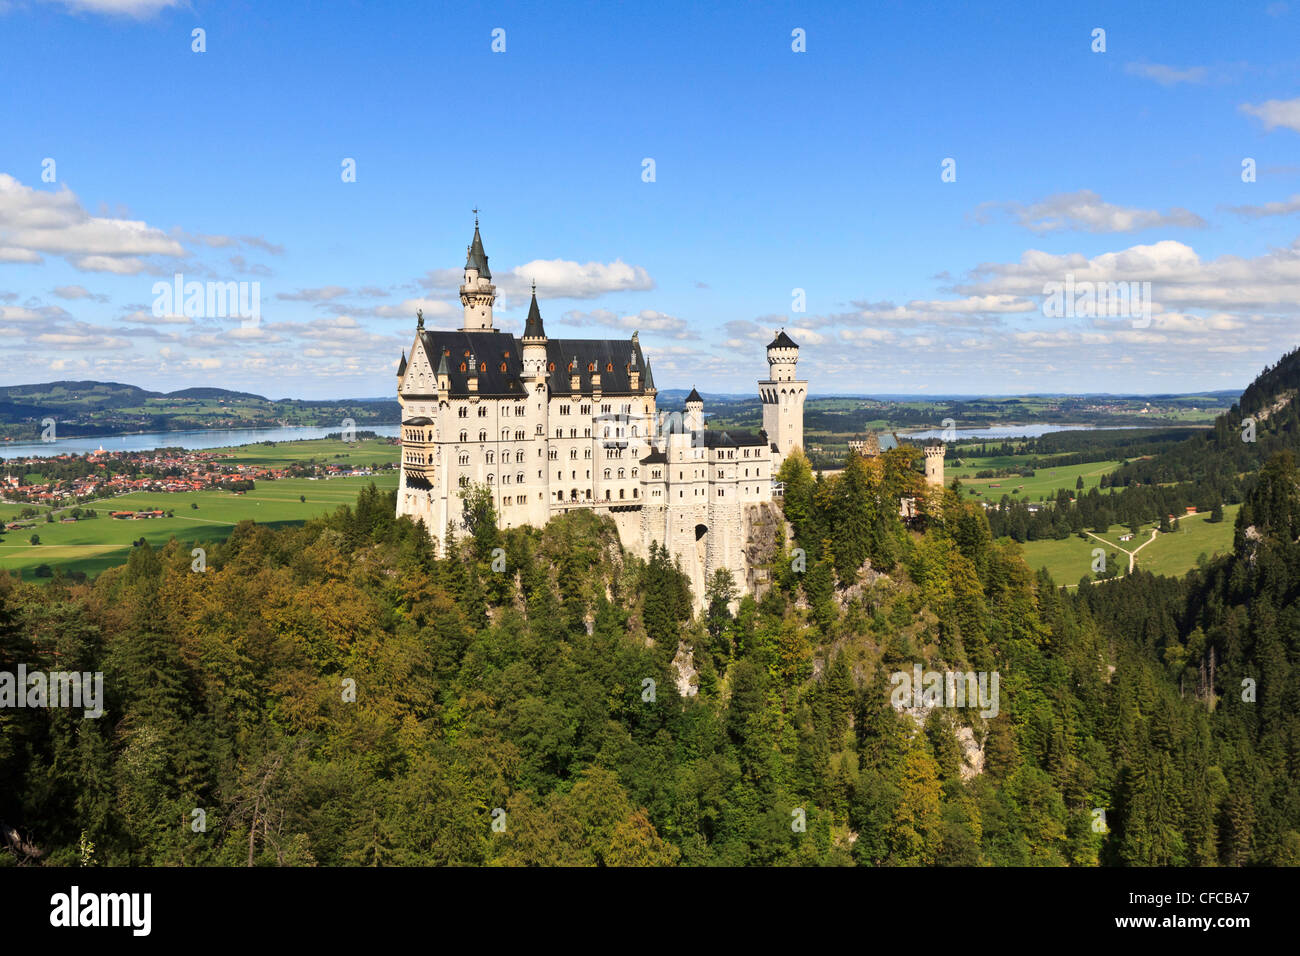 Germany, Ludwig II, Bavaria, Neuschwanstein, castle, Romanesque, Revival palace, Schwangau, Bavaria Stock Photo